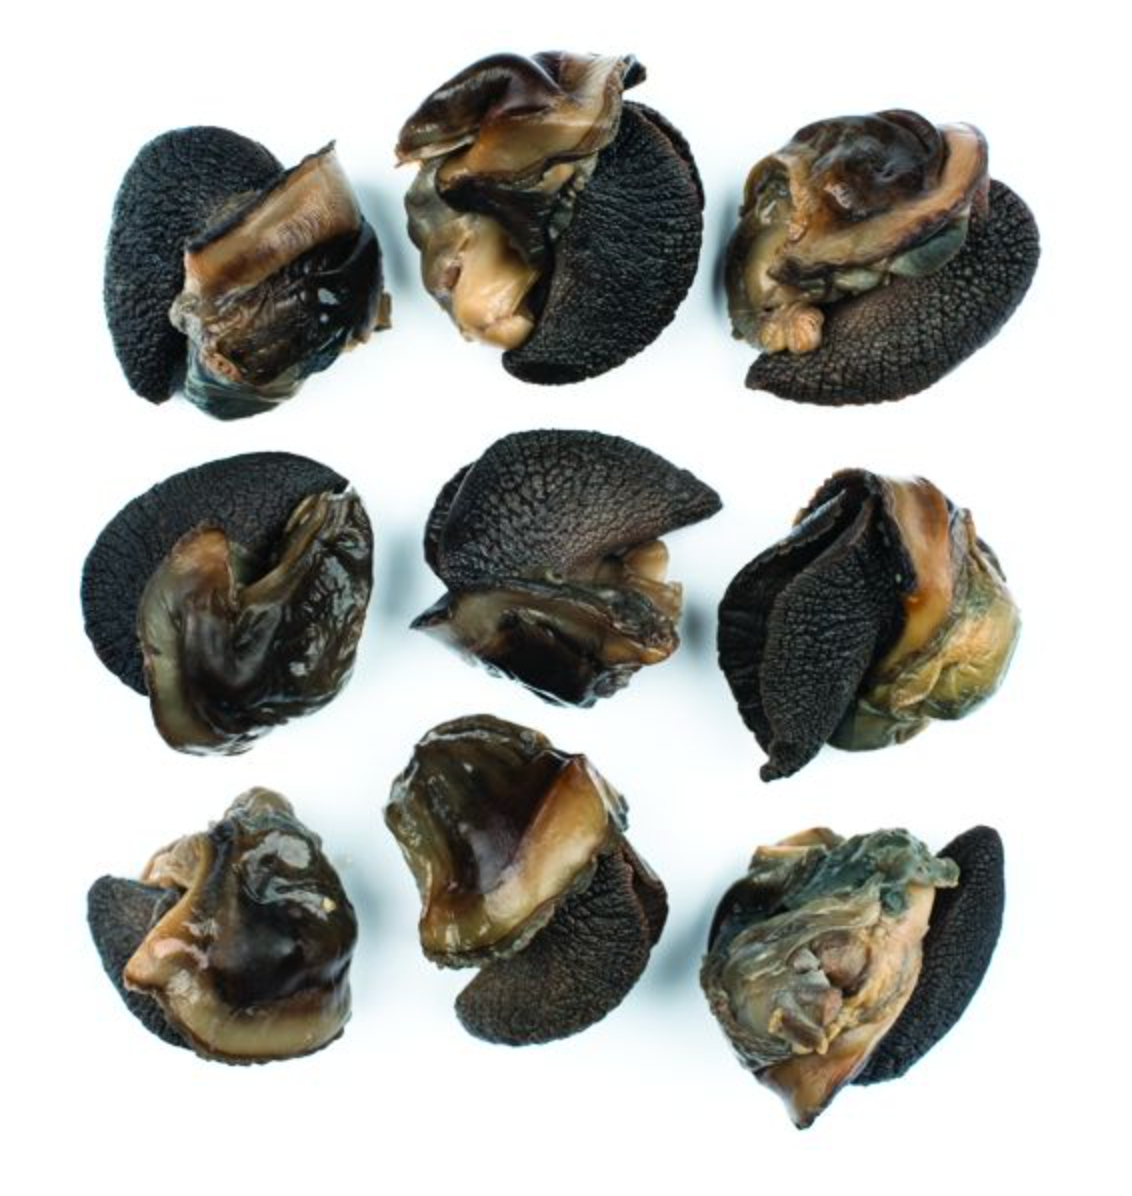 Escargot (Very Large Snails)